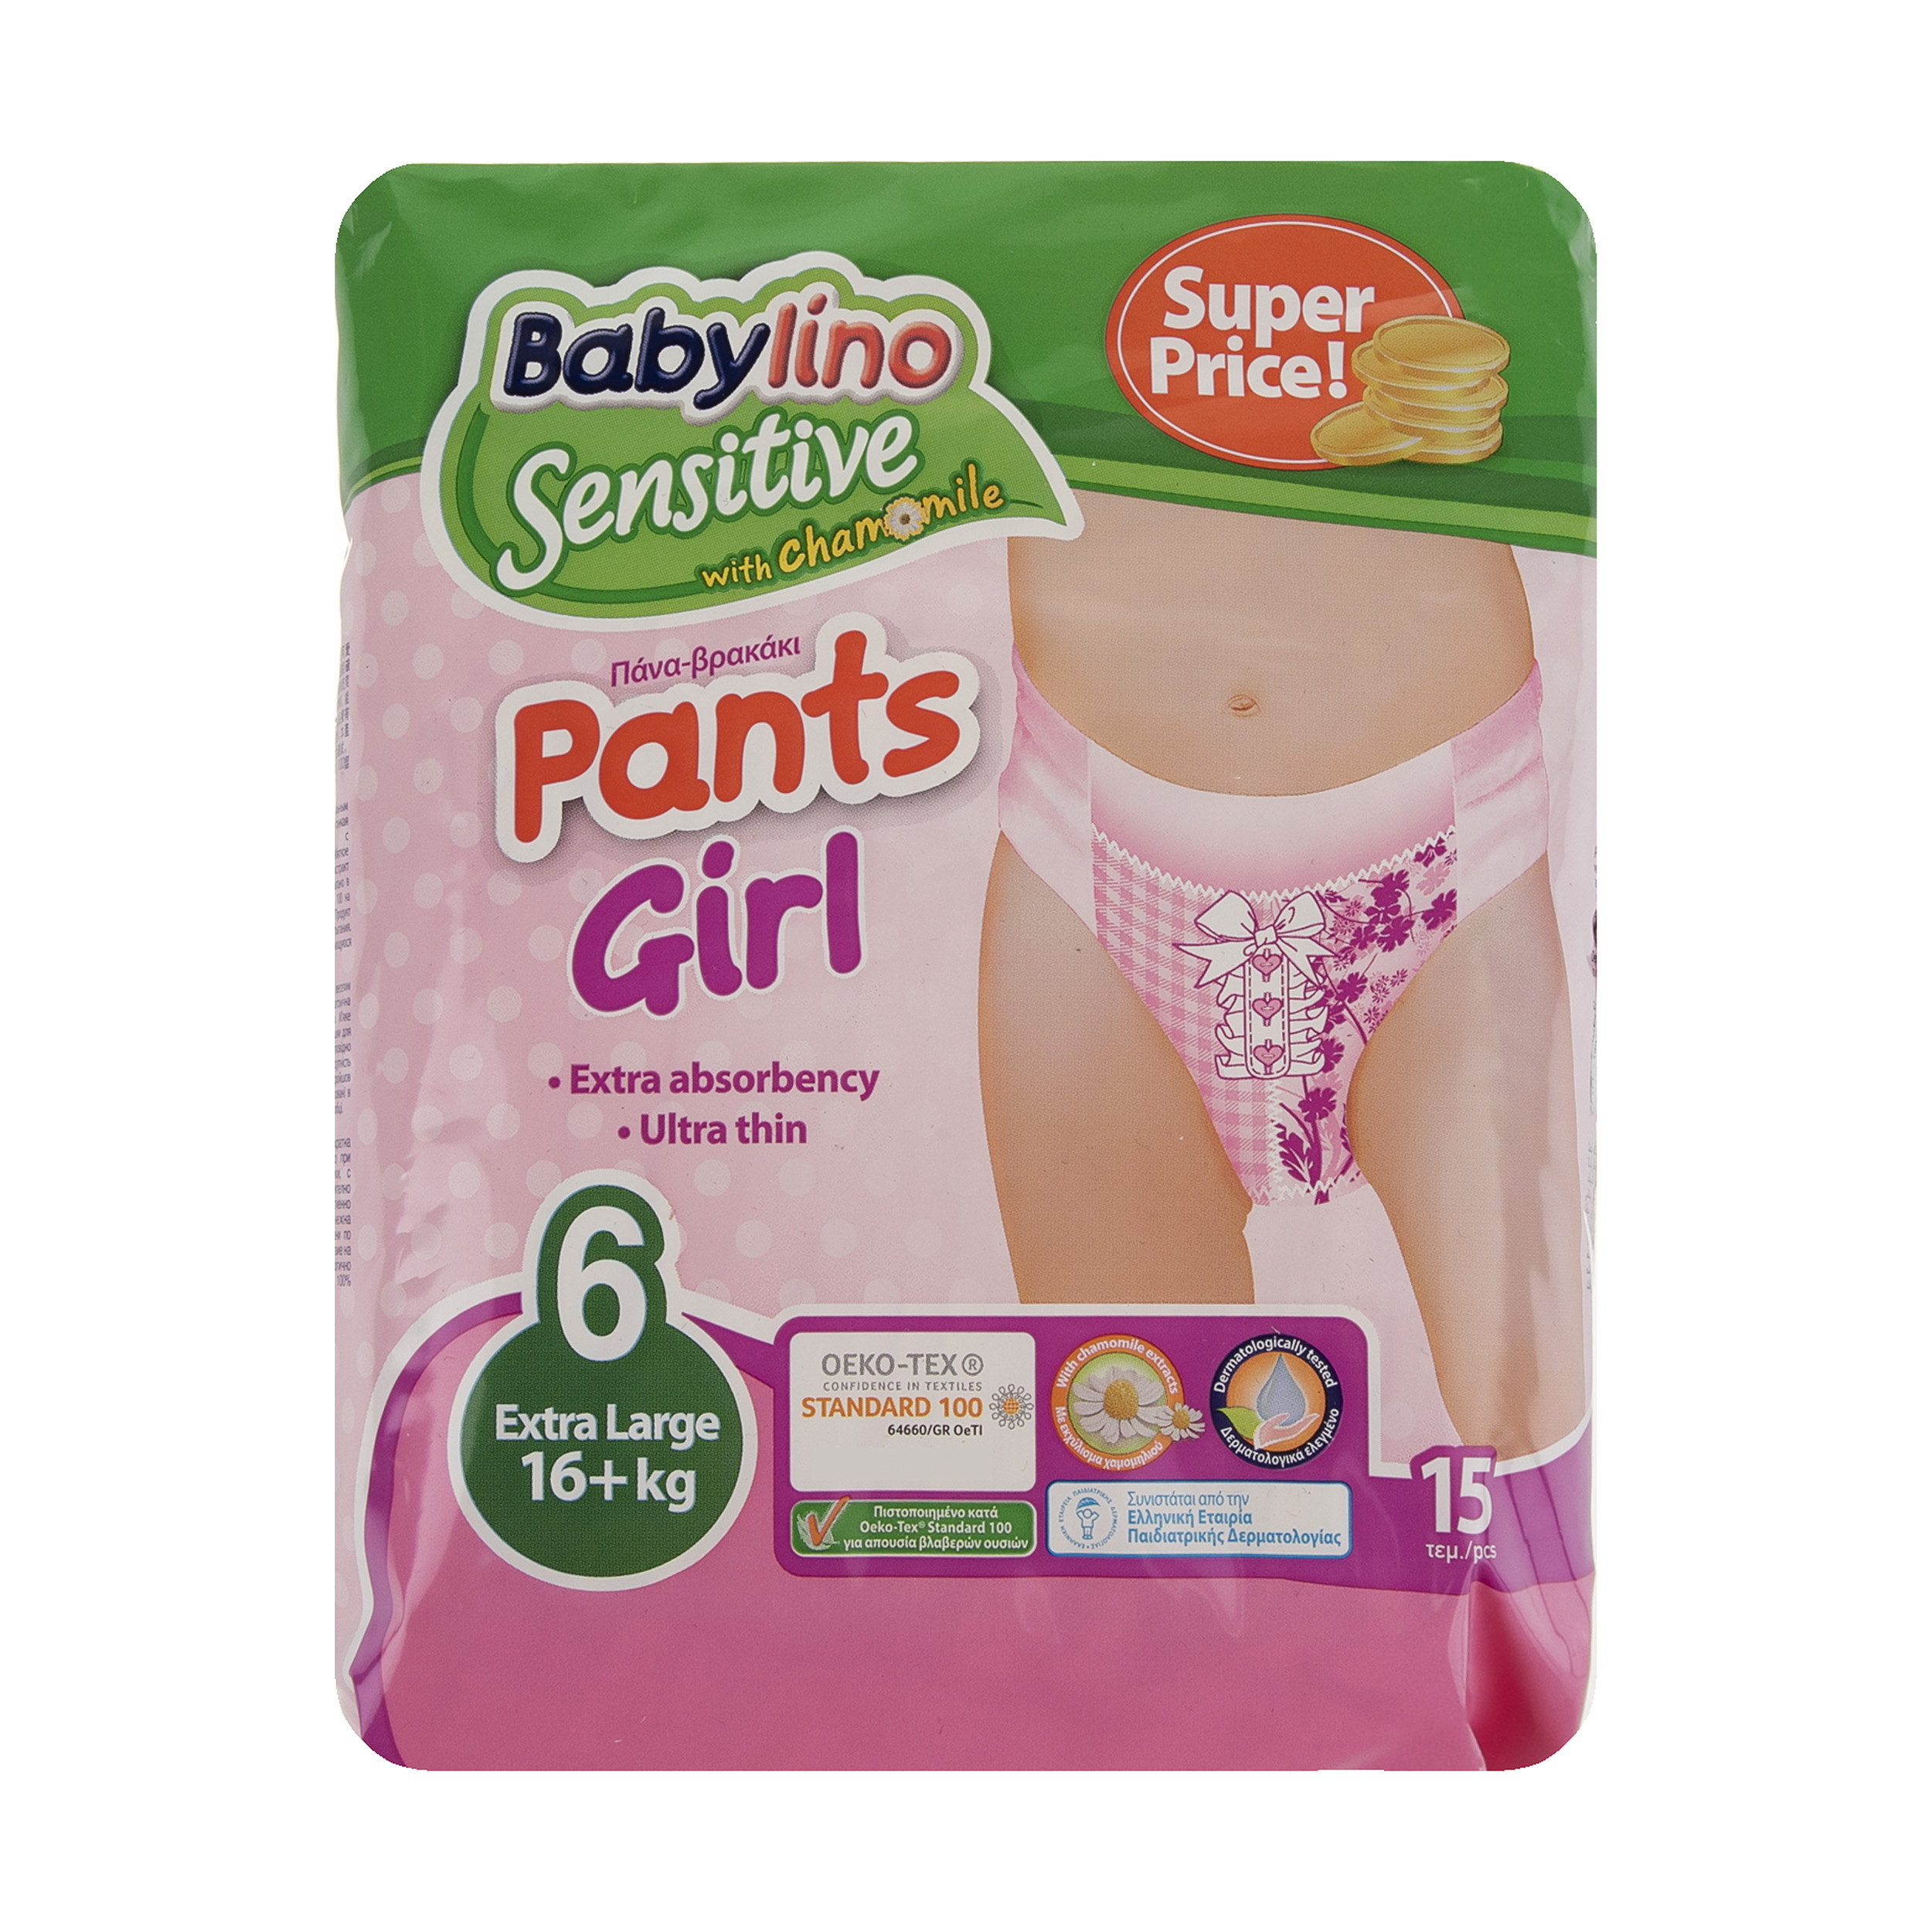 پوشک شورتی ضد حساسیت بیبی لینو مدل Pants Girl سایز 6 بسته 15 عددی